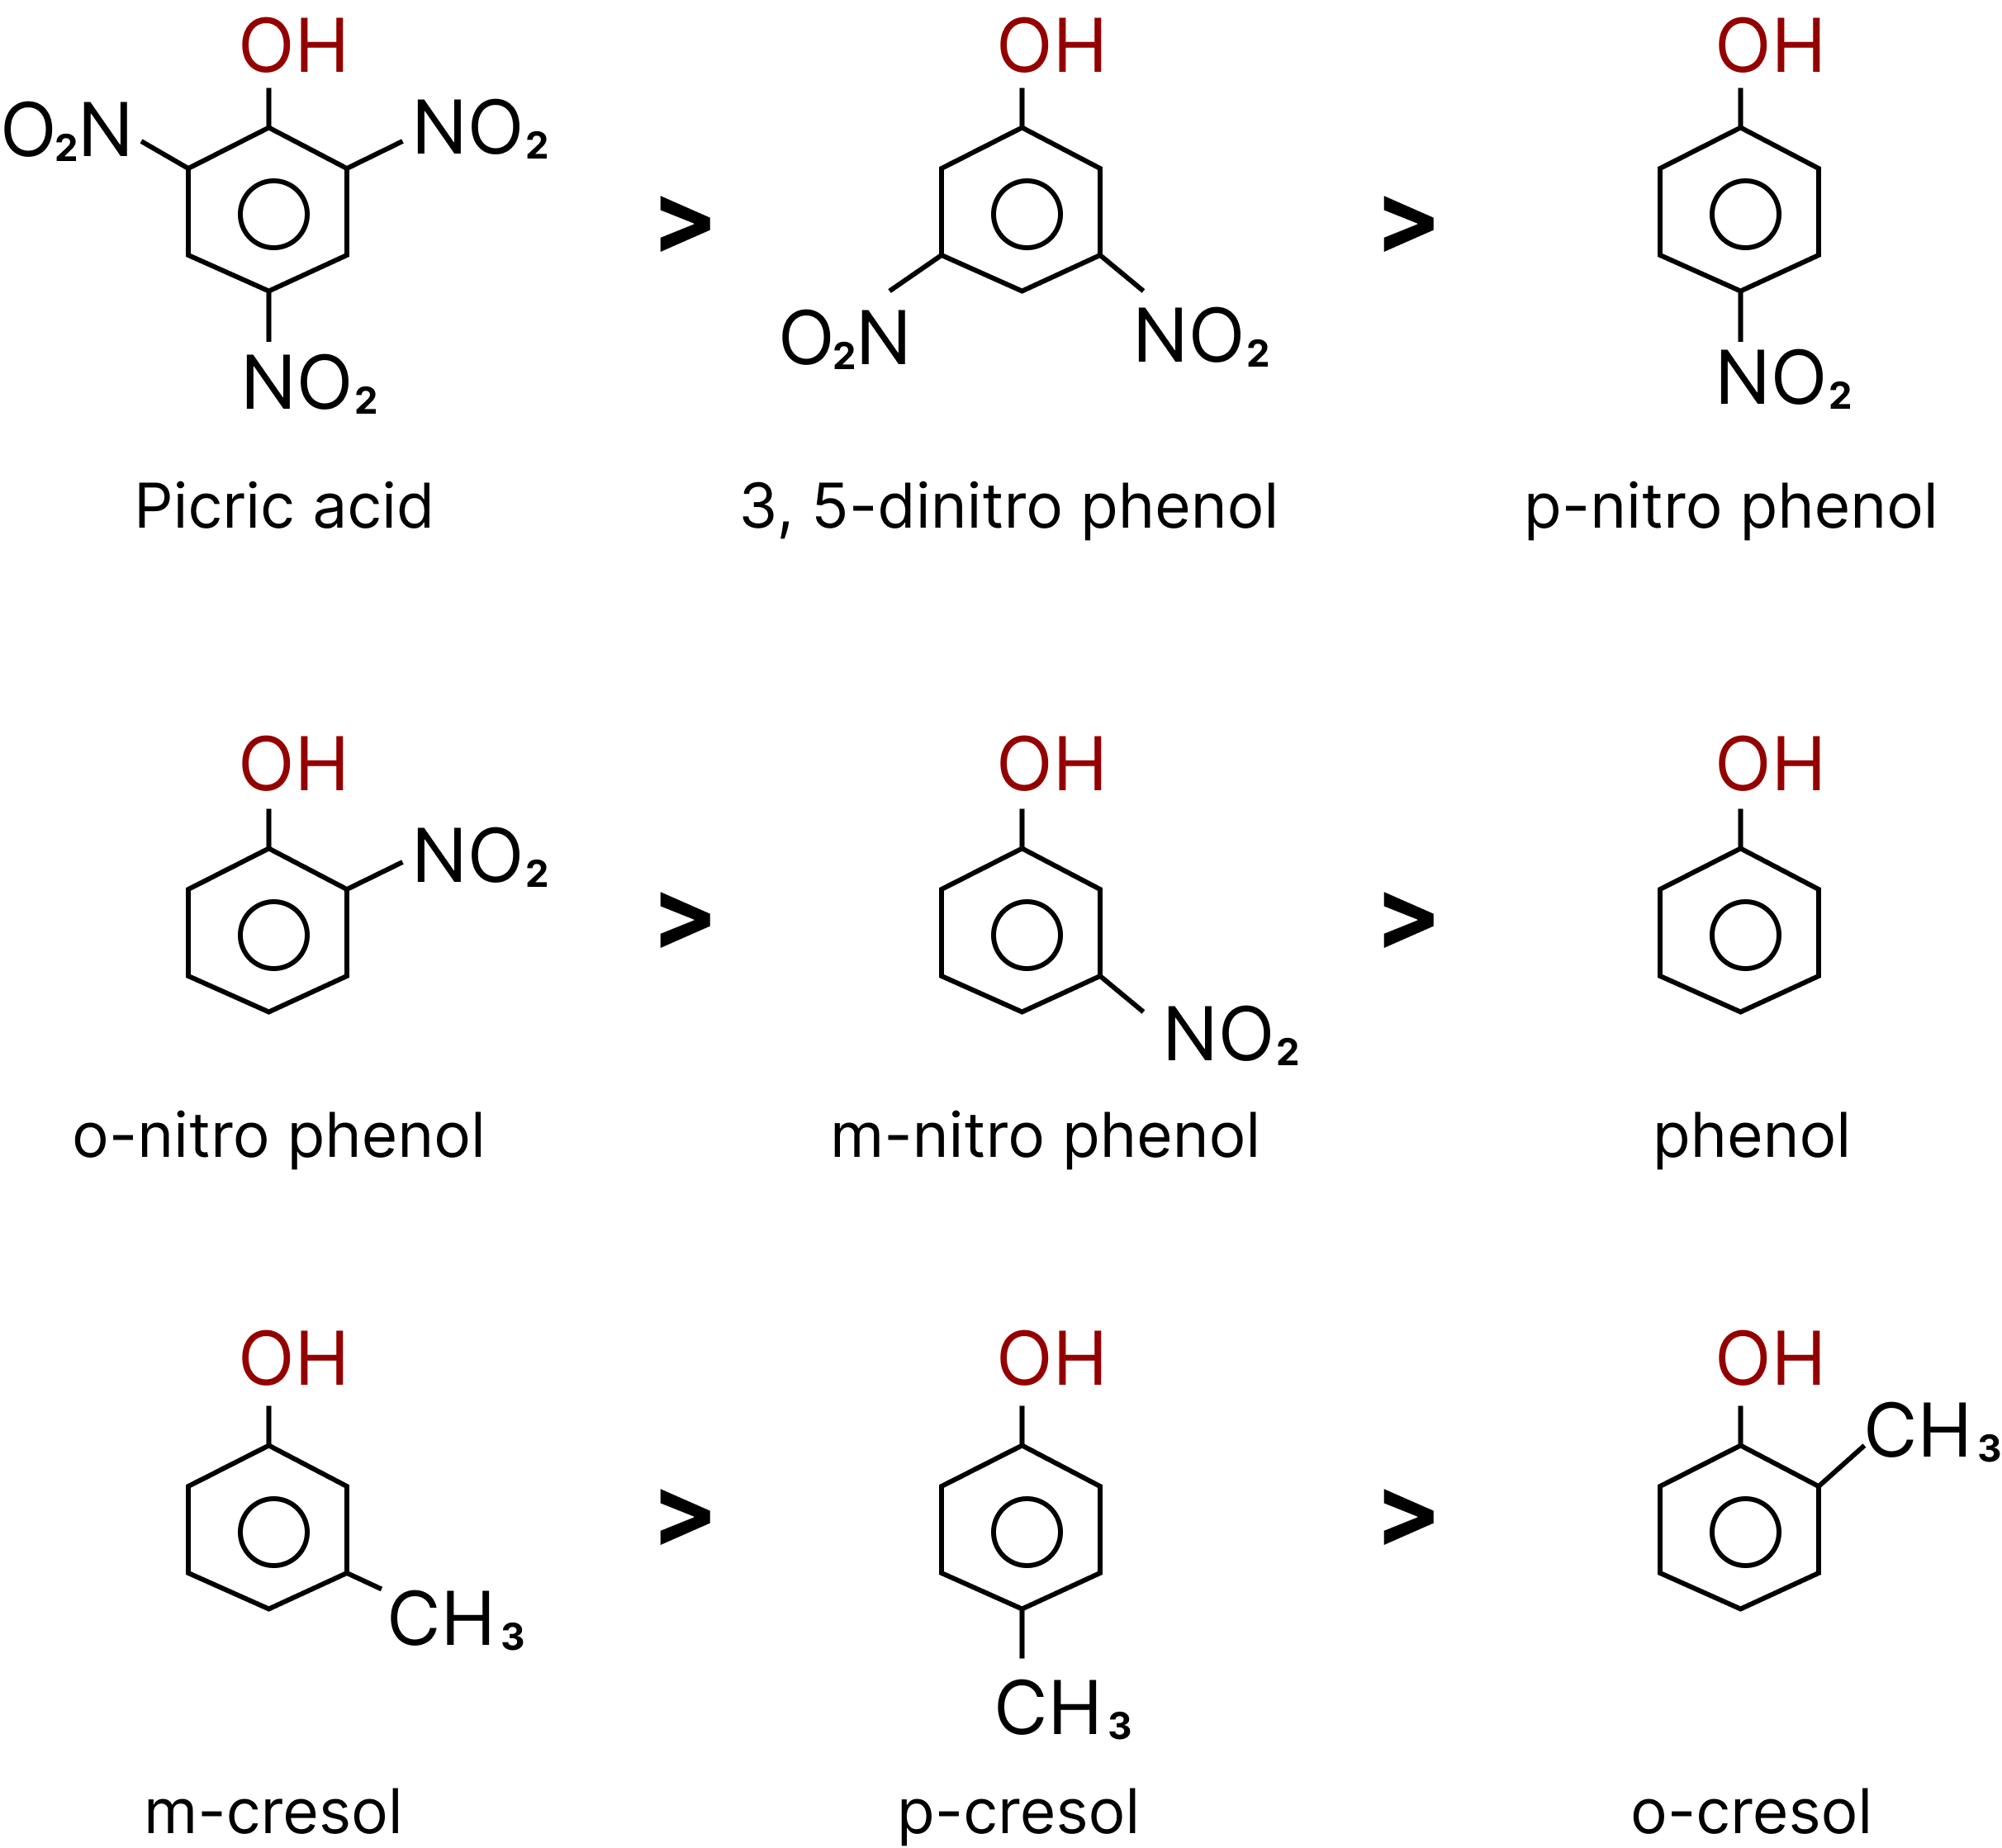 Order of Acidic Strength of Phenols.